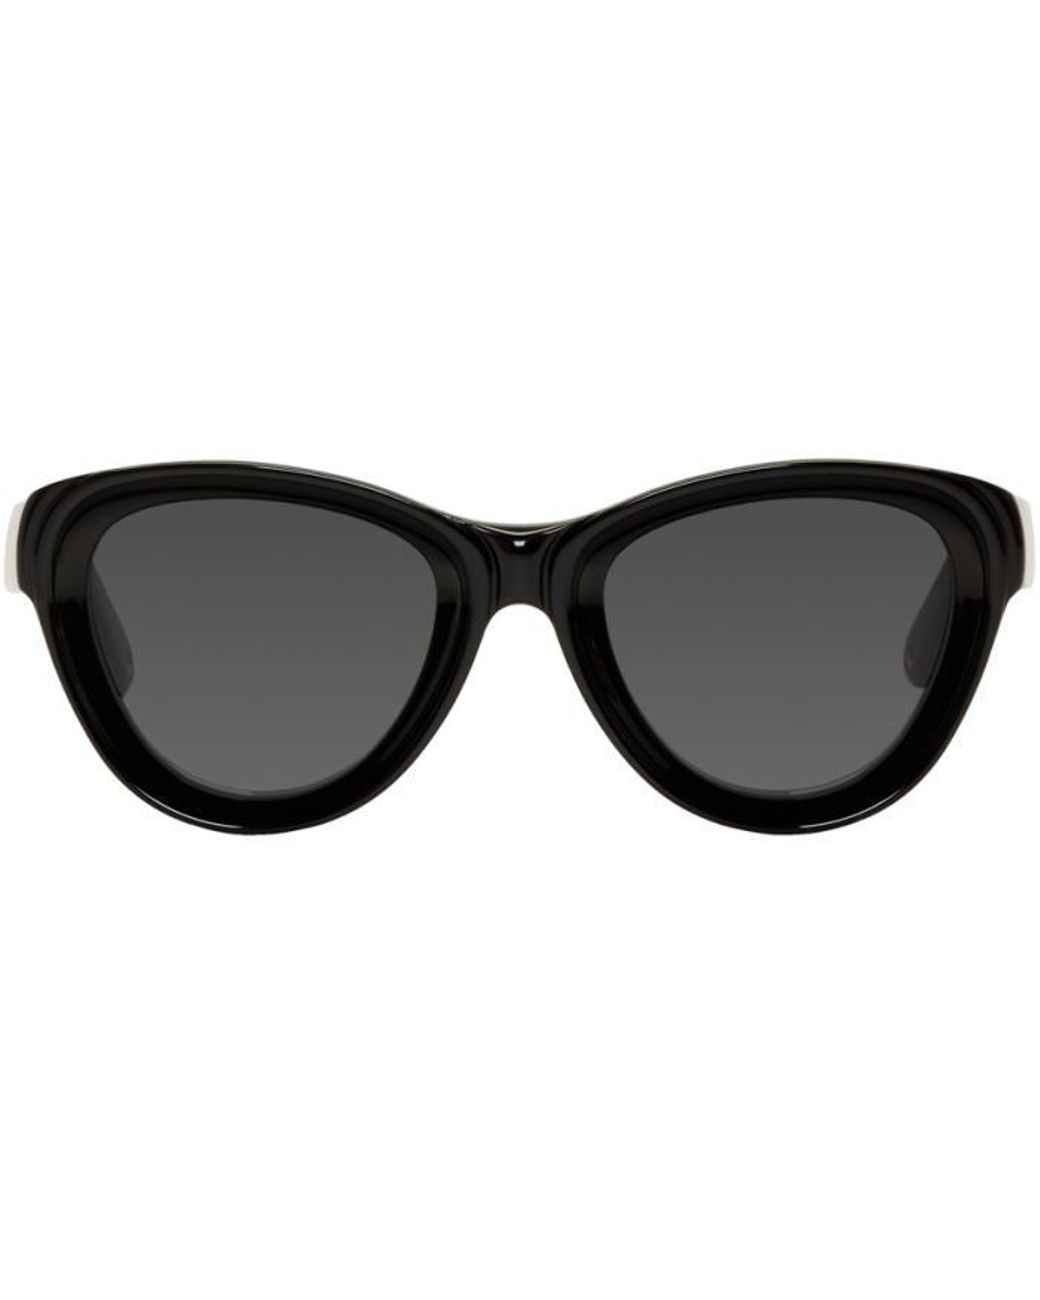 Givenchy Black Cat-eye Sunglasses | Lyst